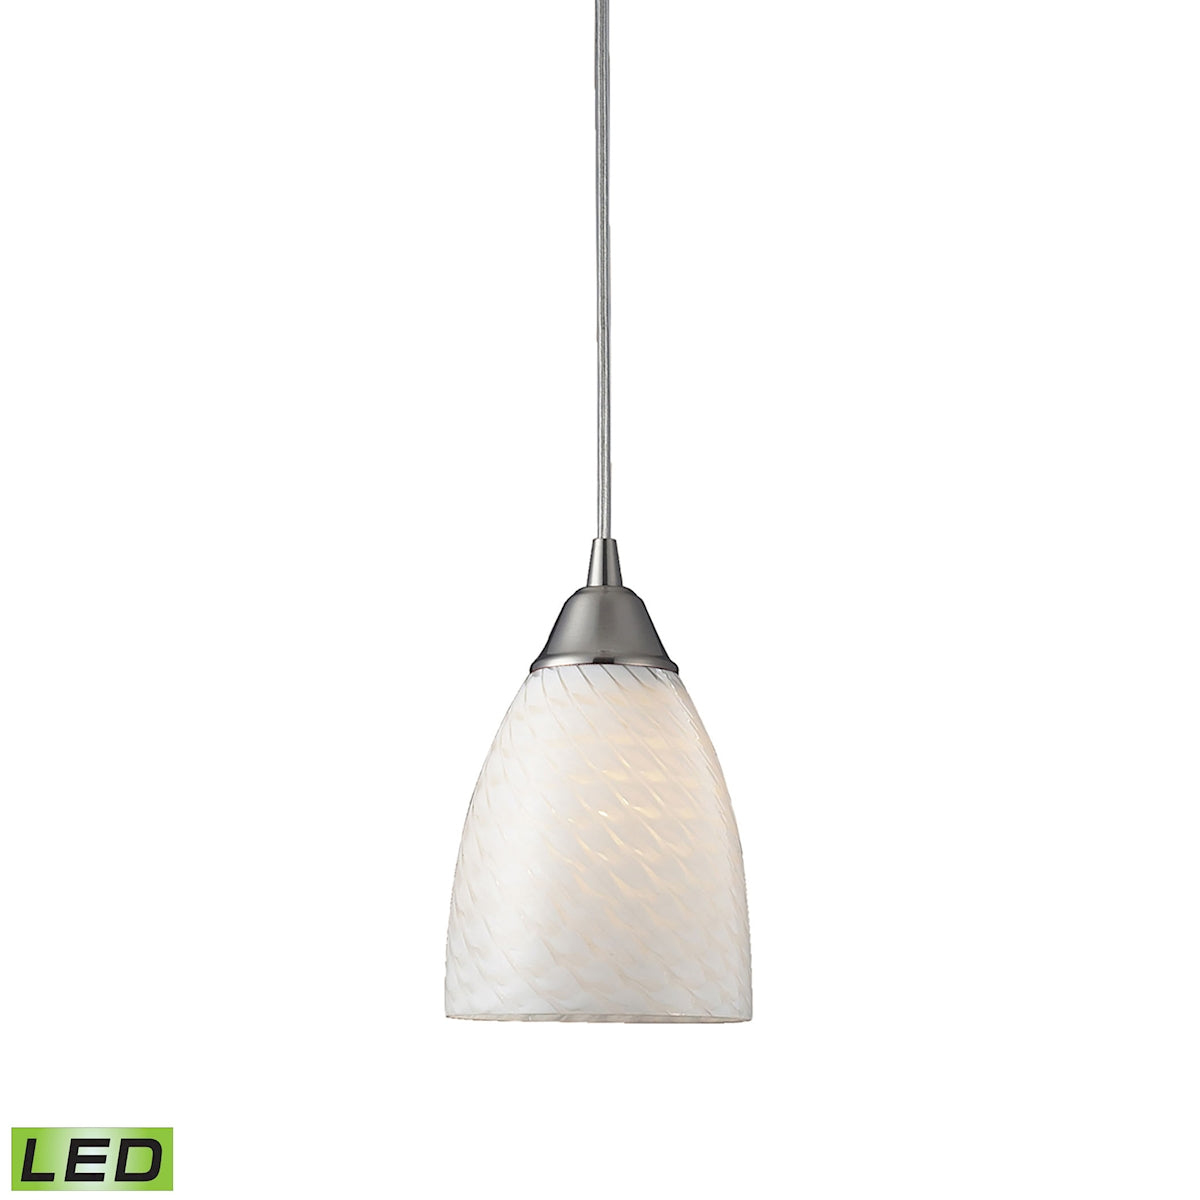 ELK Lighting 416-1WS-LED Arco Baleno 1-Light Mini Pendant in Satin Nickel with White Swirl Glass - Includes LED Bulb